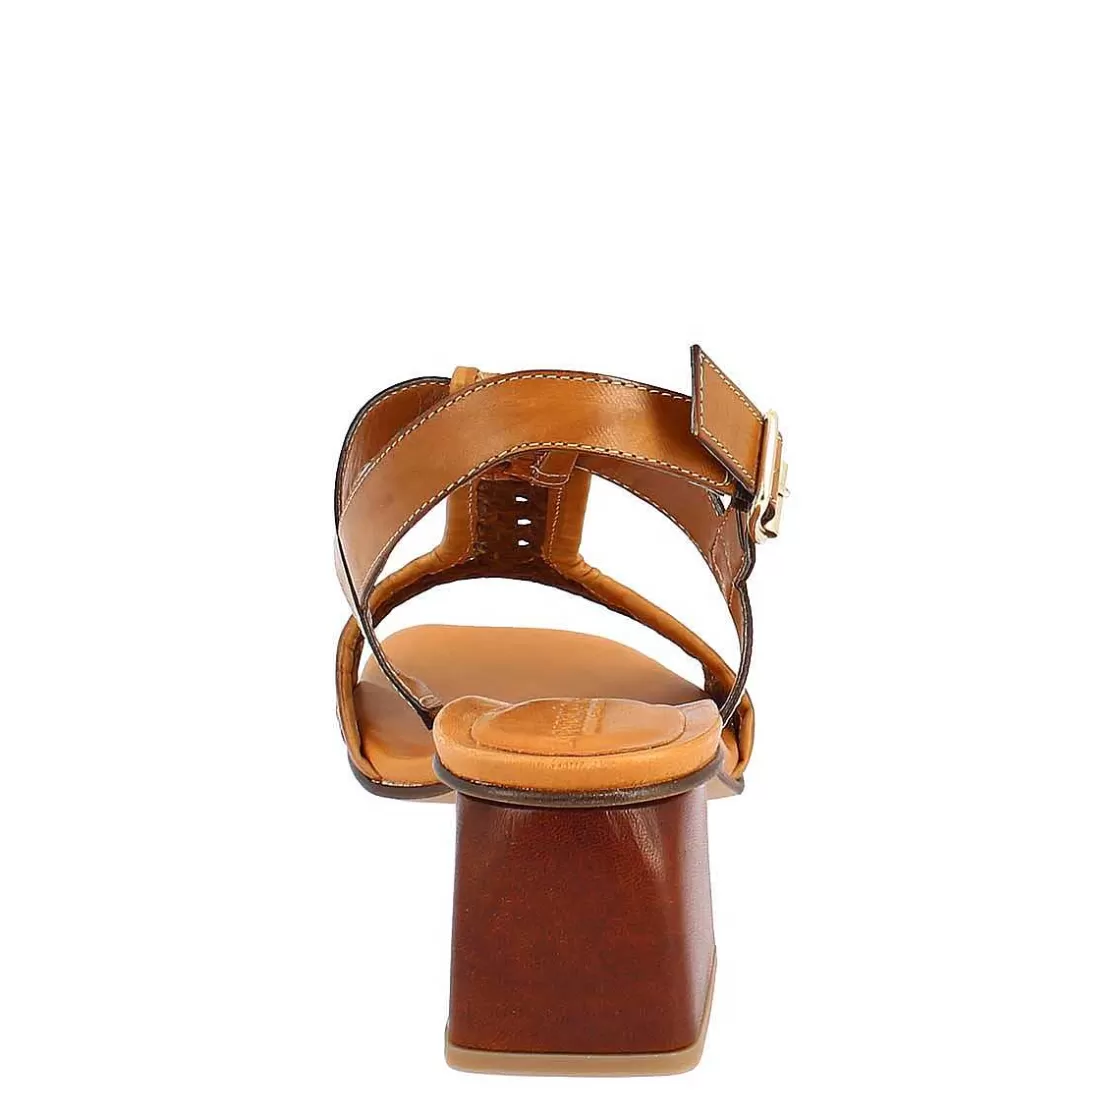 Leonardo Handmade Women'S Slingback Sandals In Tan Colored Woven Leather. Clearance